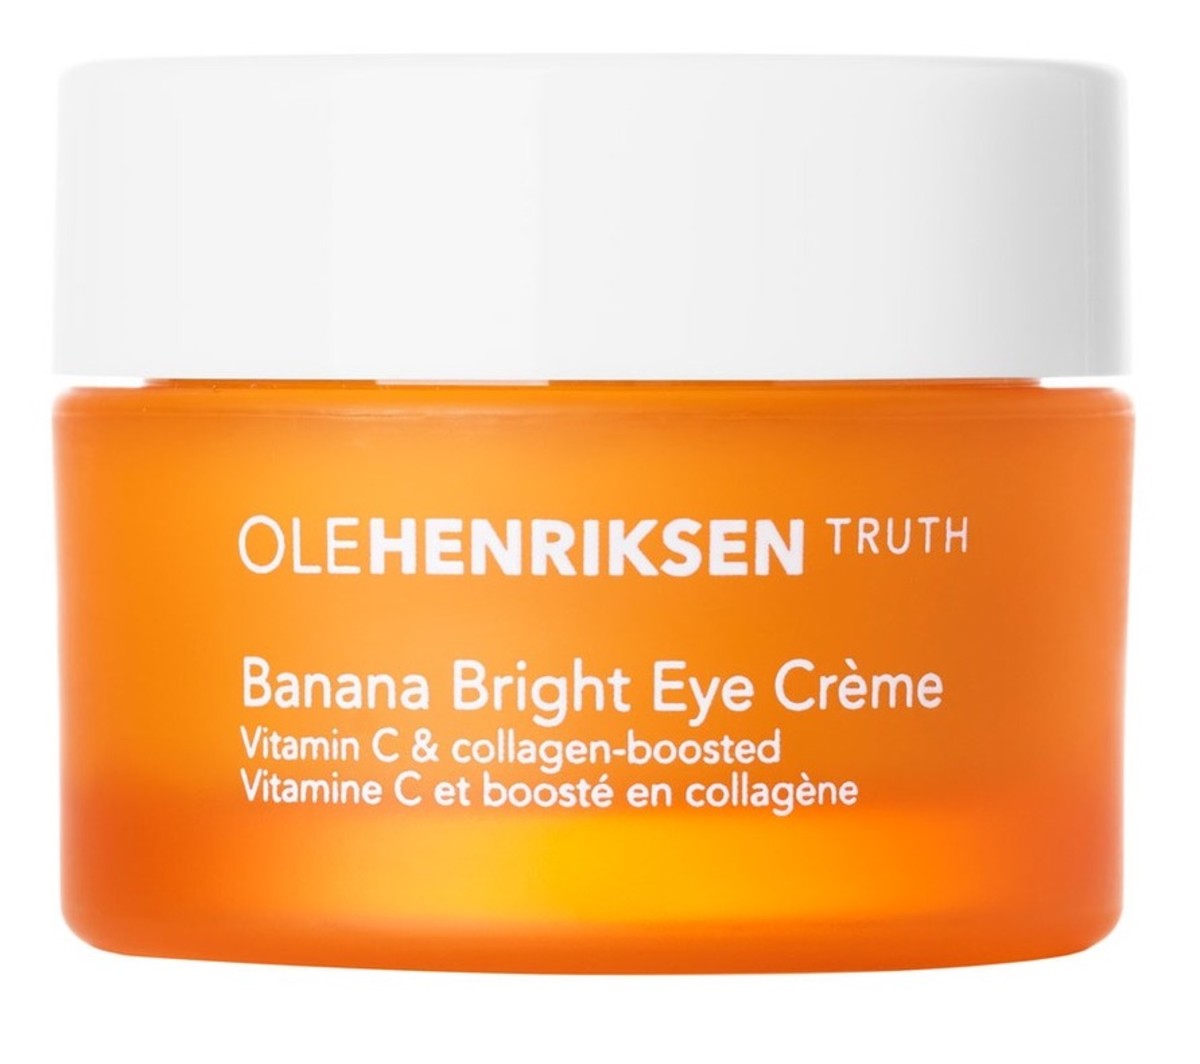 Ole Henriksen Banana Bright Eye Crème, $38, available here.